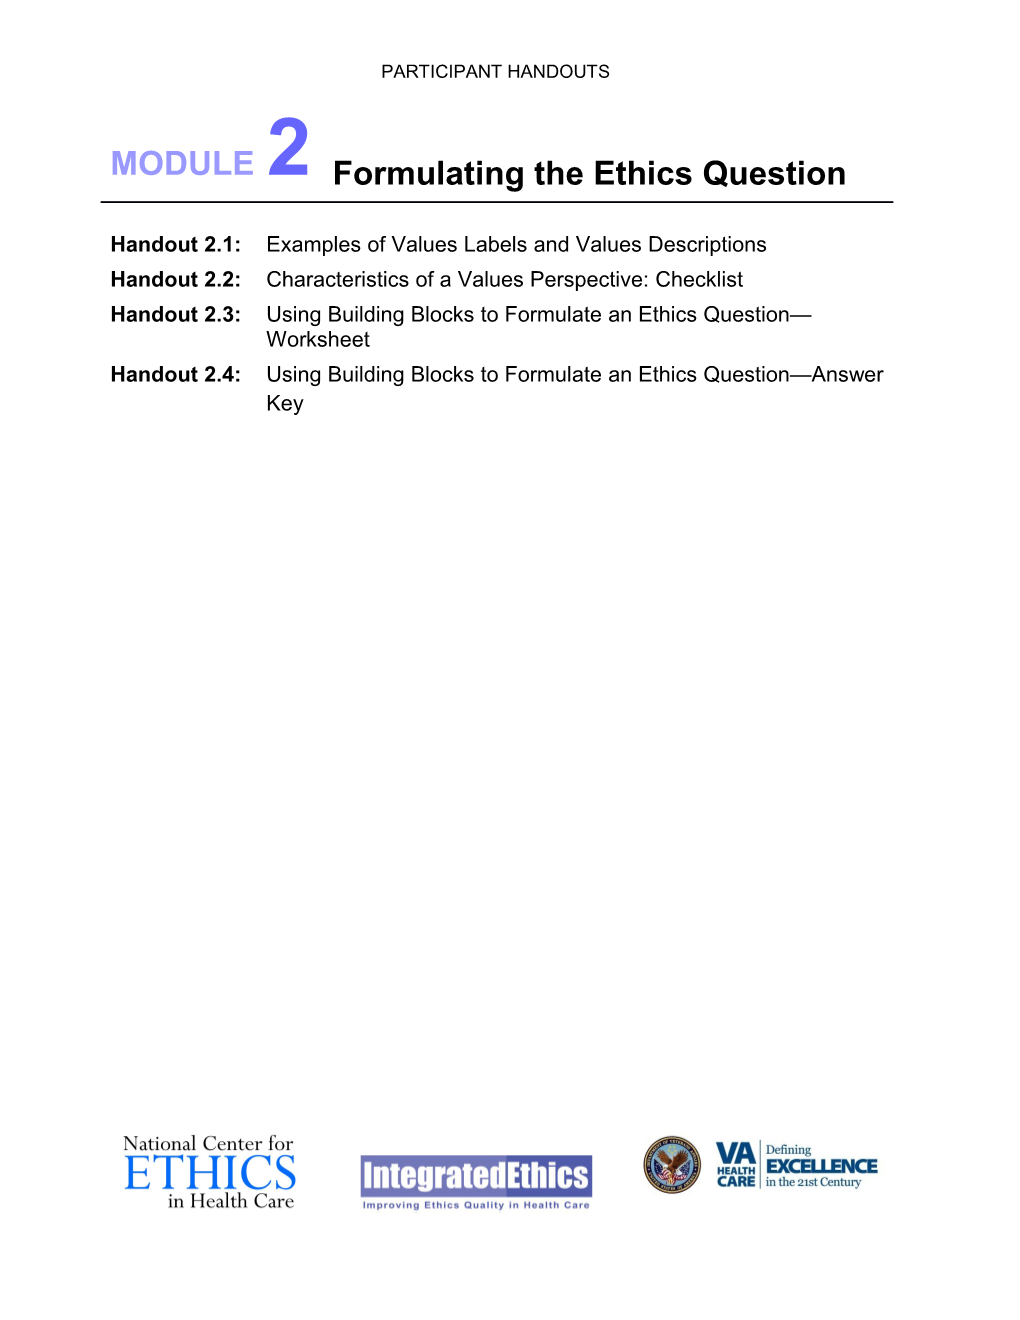 Integratedethics Ethics Consultation Beyond the Basics Module 2 - Handouts - US Department